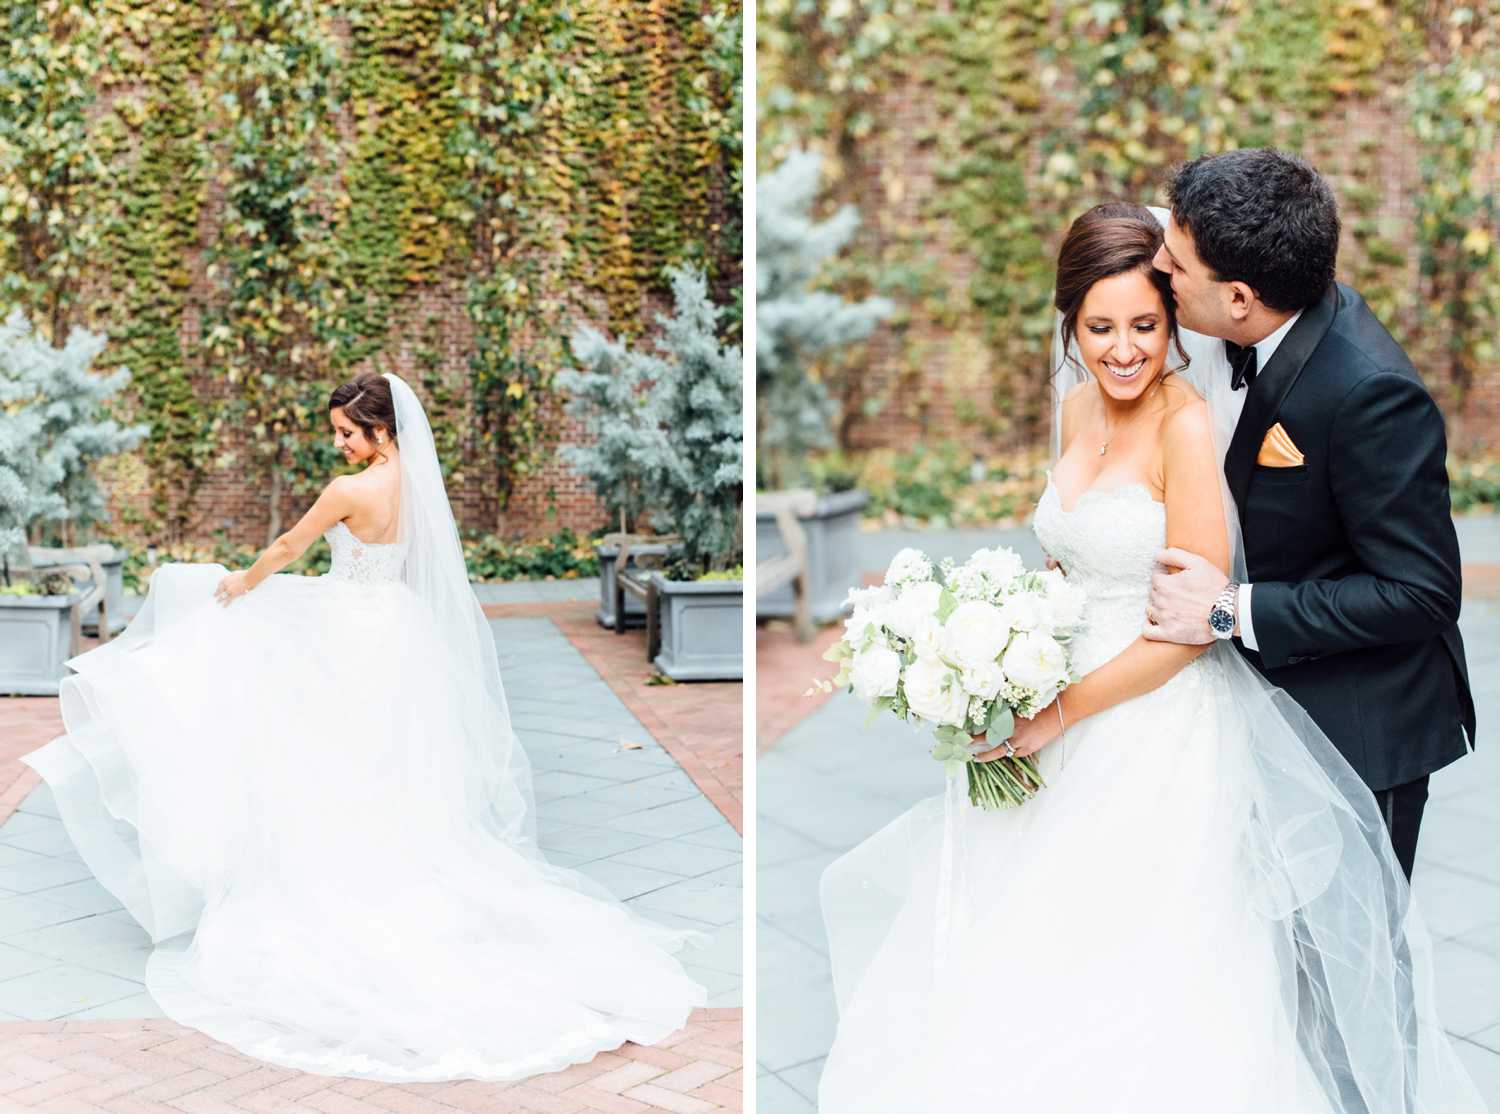 Jessica + Eyad - College of Physicians Wedding - Philadelphia Wedding Photographer - Ailson Dunn Photography photo